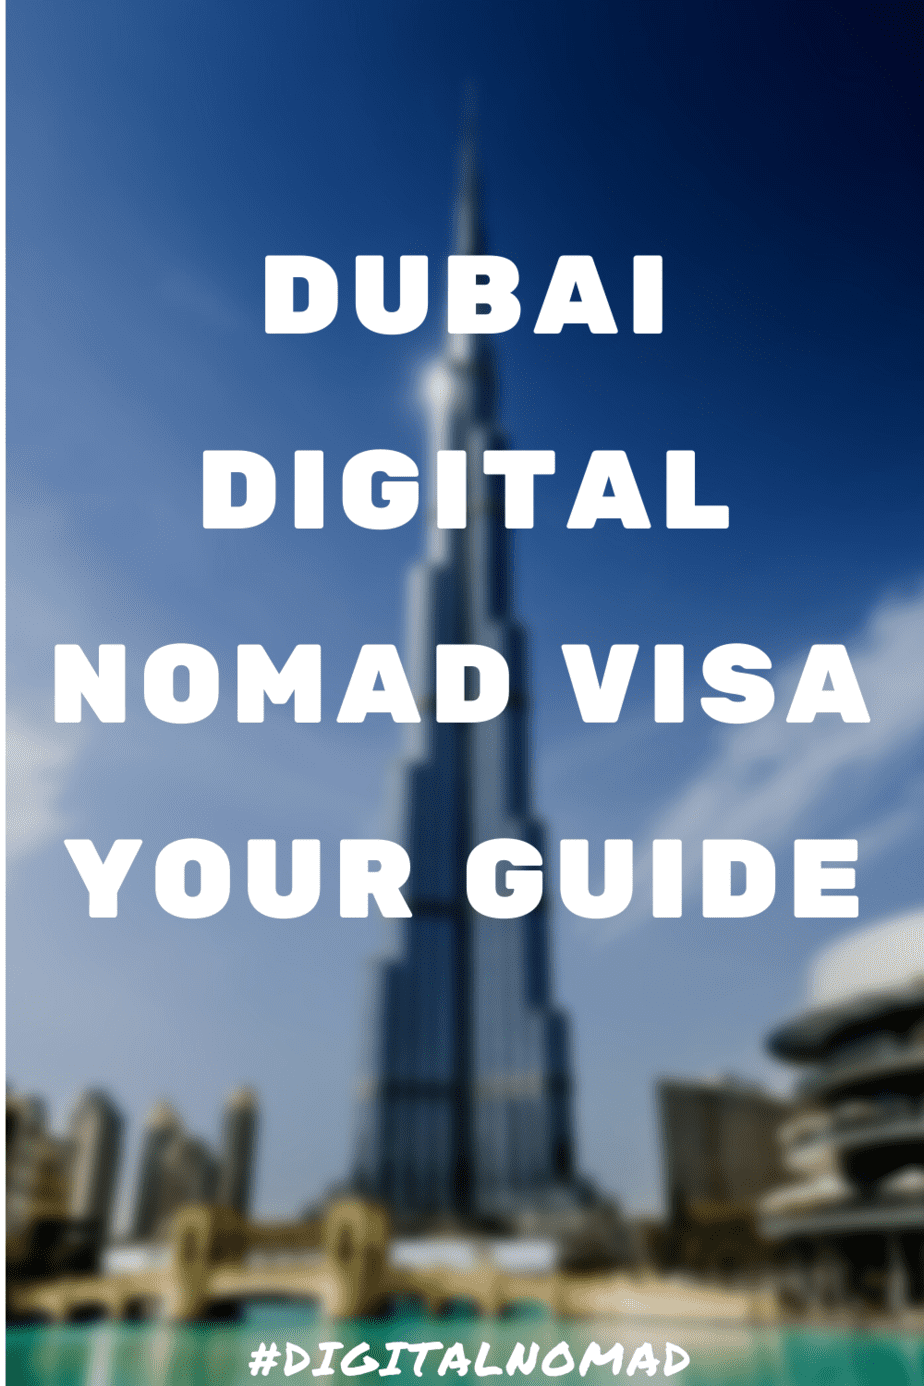 Dubai Digital Nomad Visa